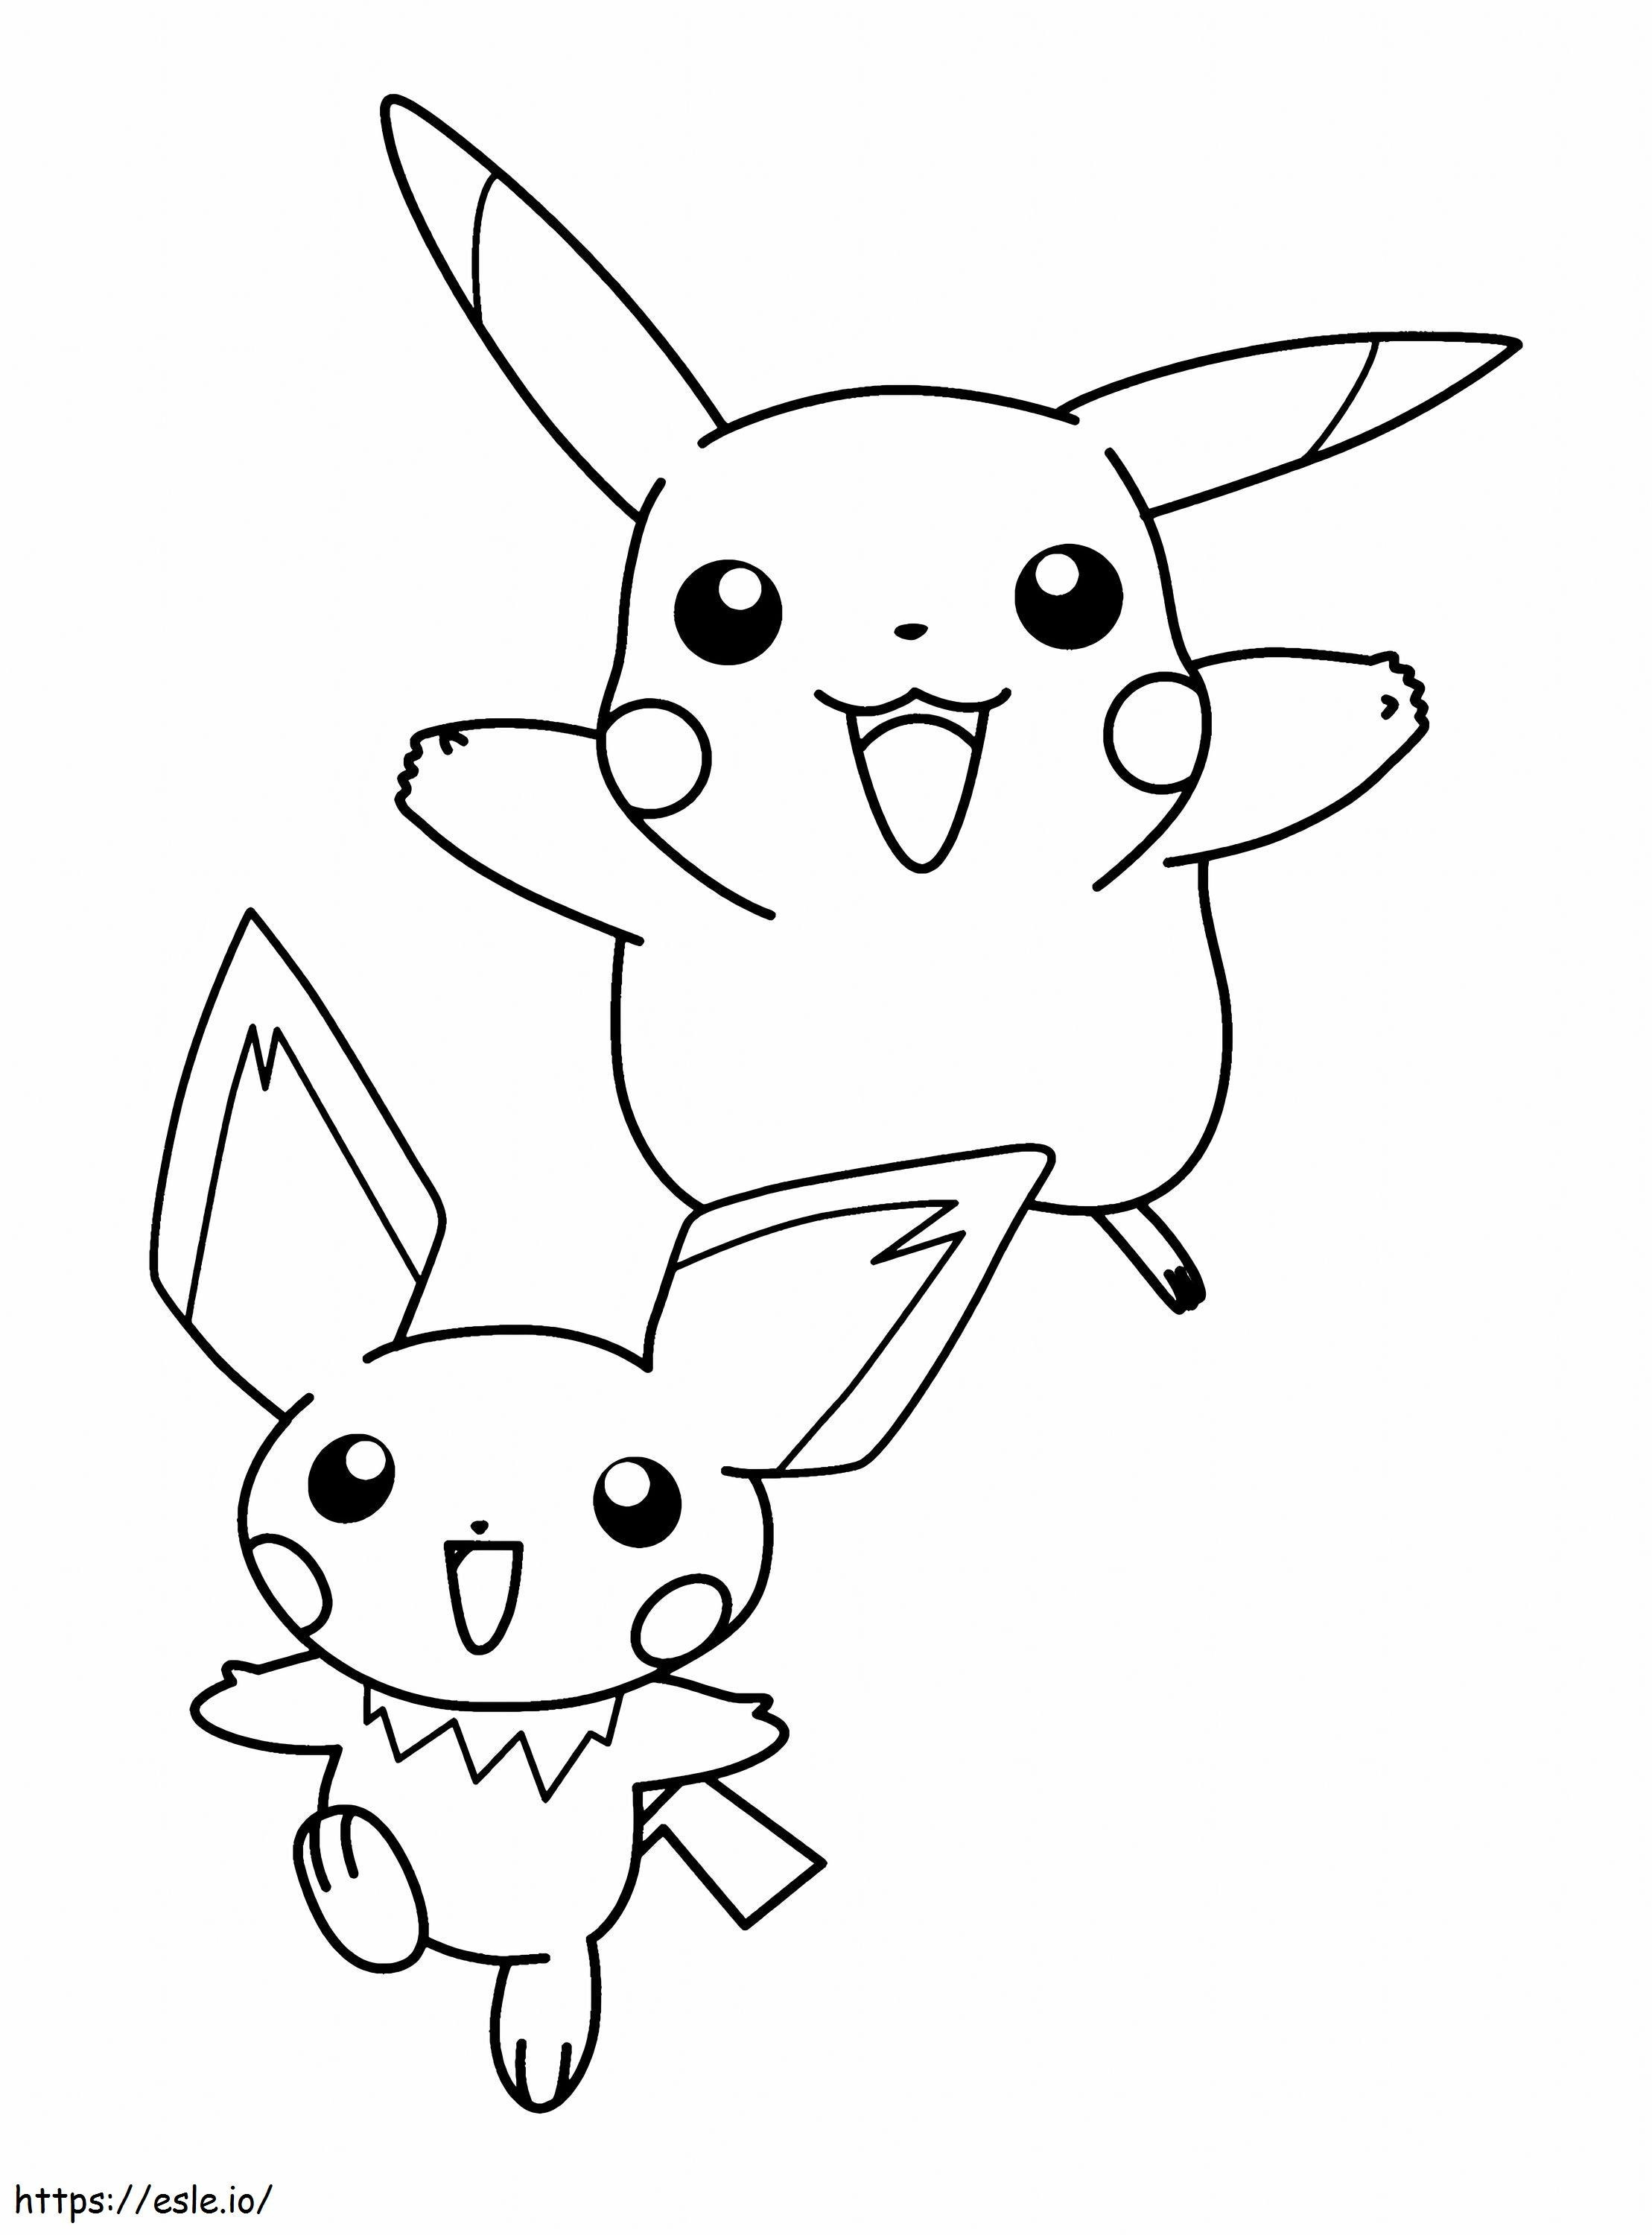 Pikachu dan Pichu Gambar Mewarnai